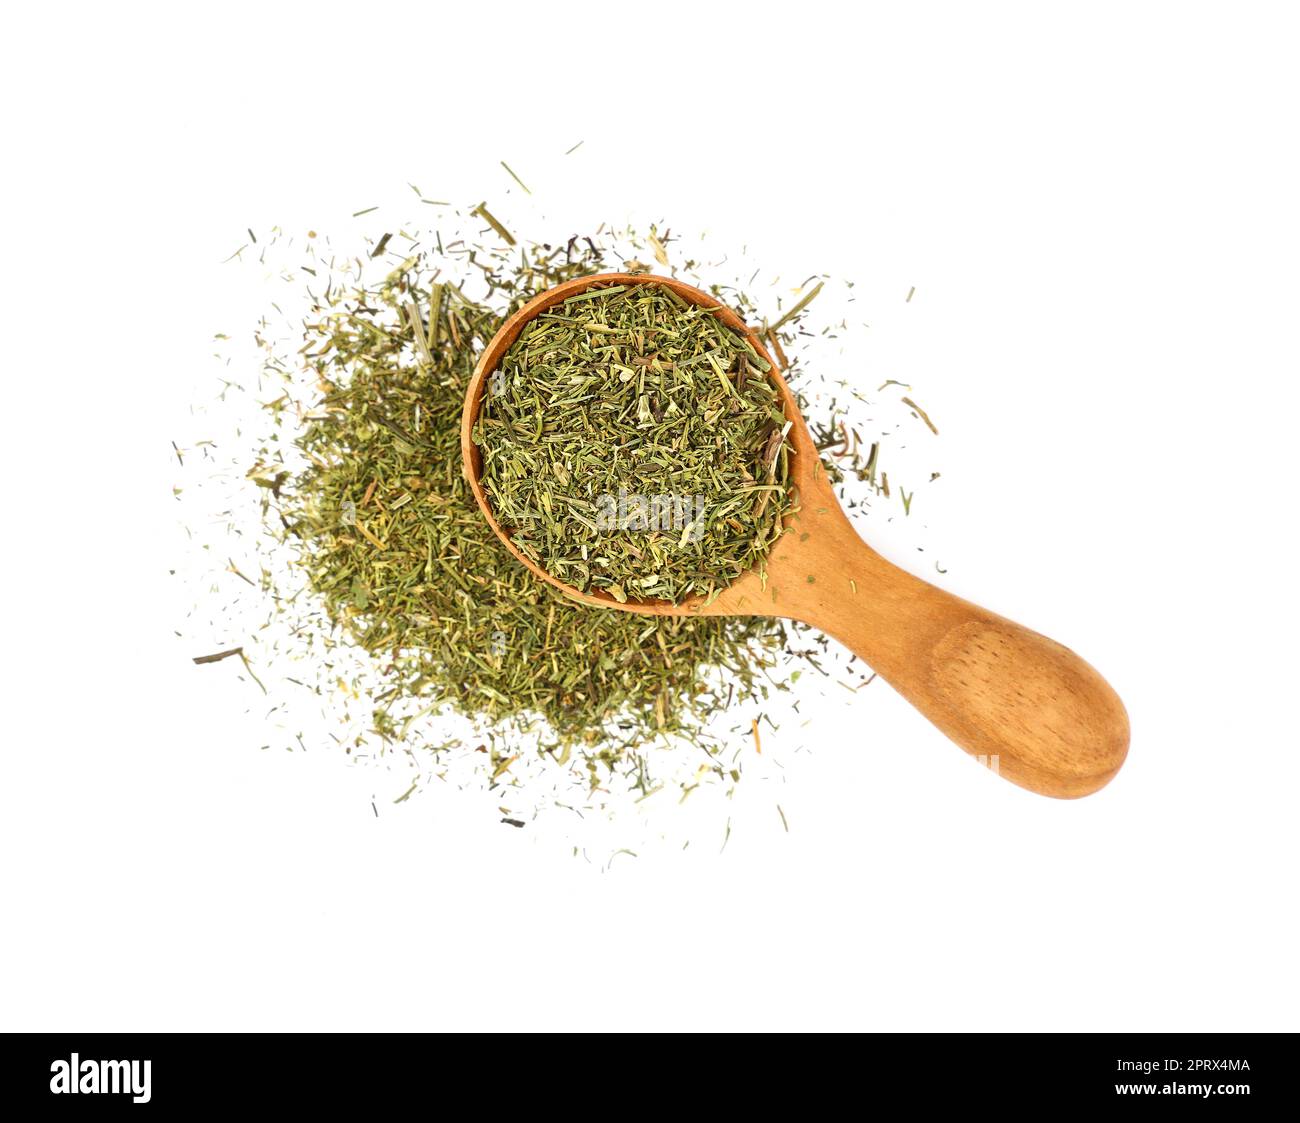 https://c8.alamy.com/comp/2PRX4MA/wooden-scoop-spoon-full-of-dried-herbs-spice-2PRX4MA.jpg